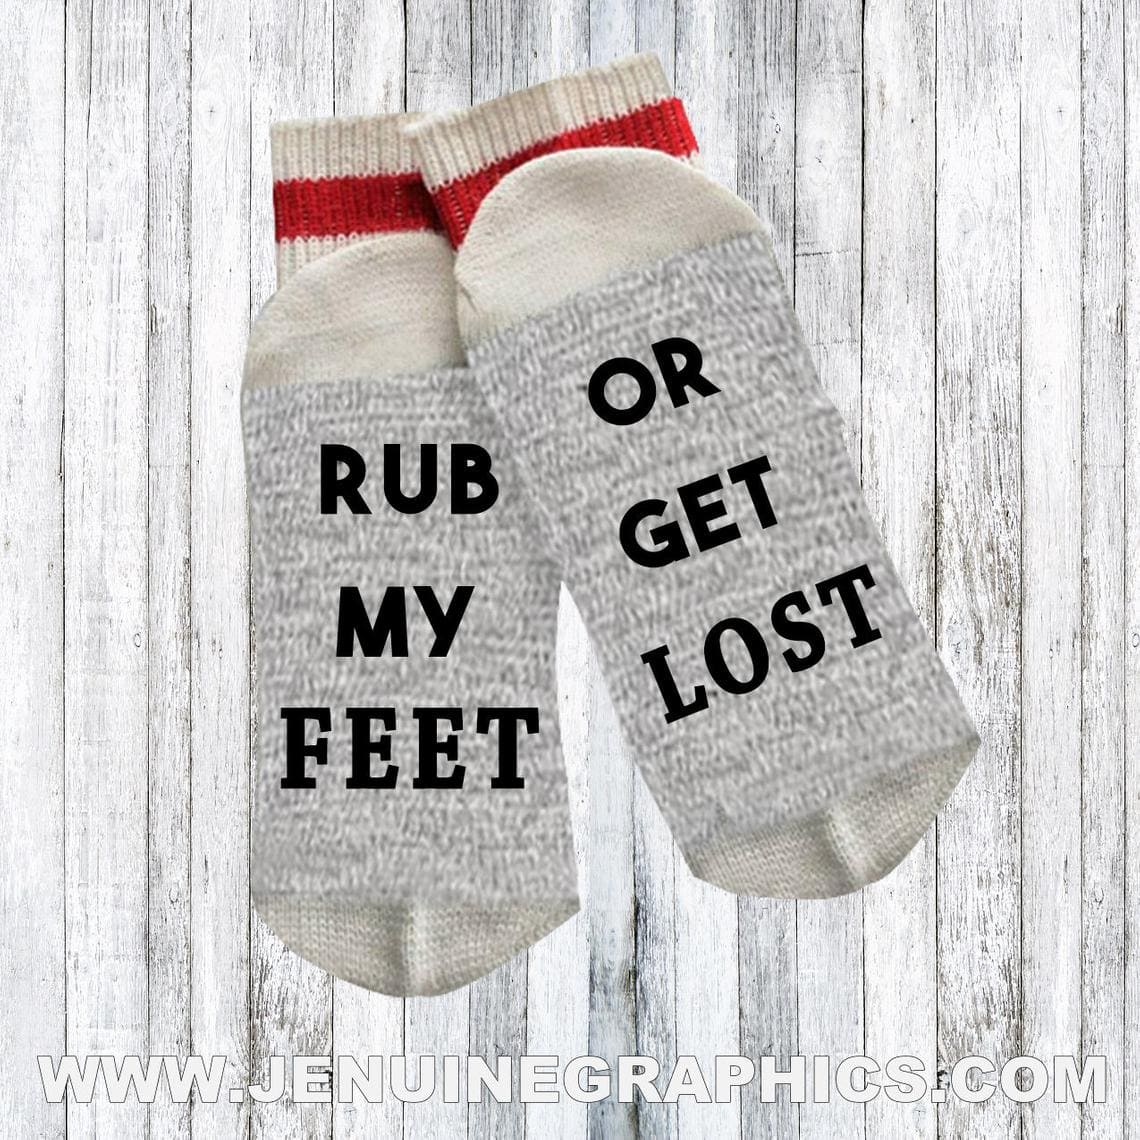 rub my feet or get lost women's sock gag gift 